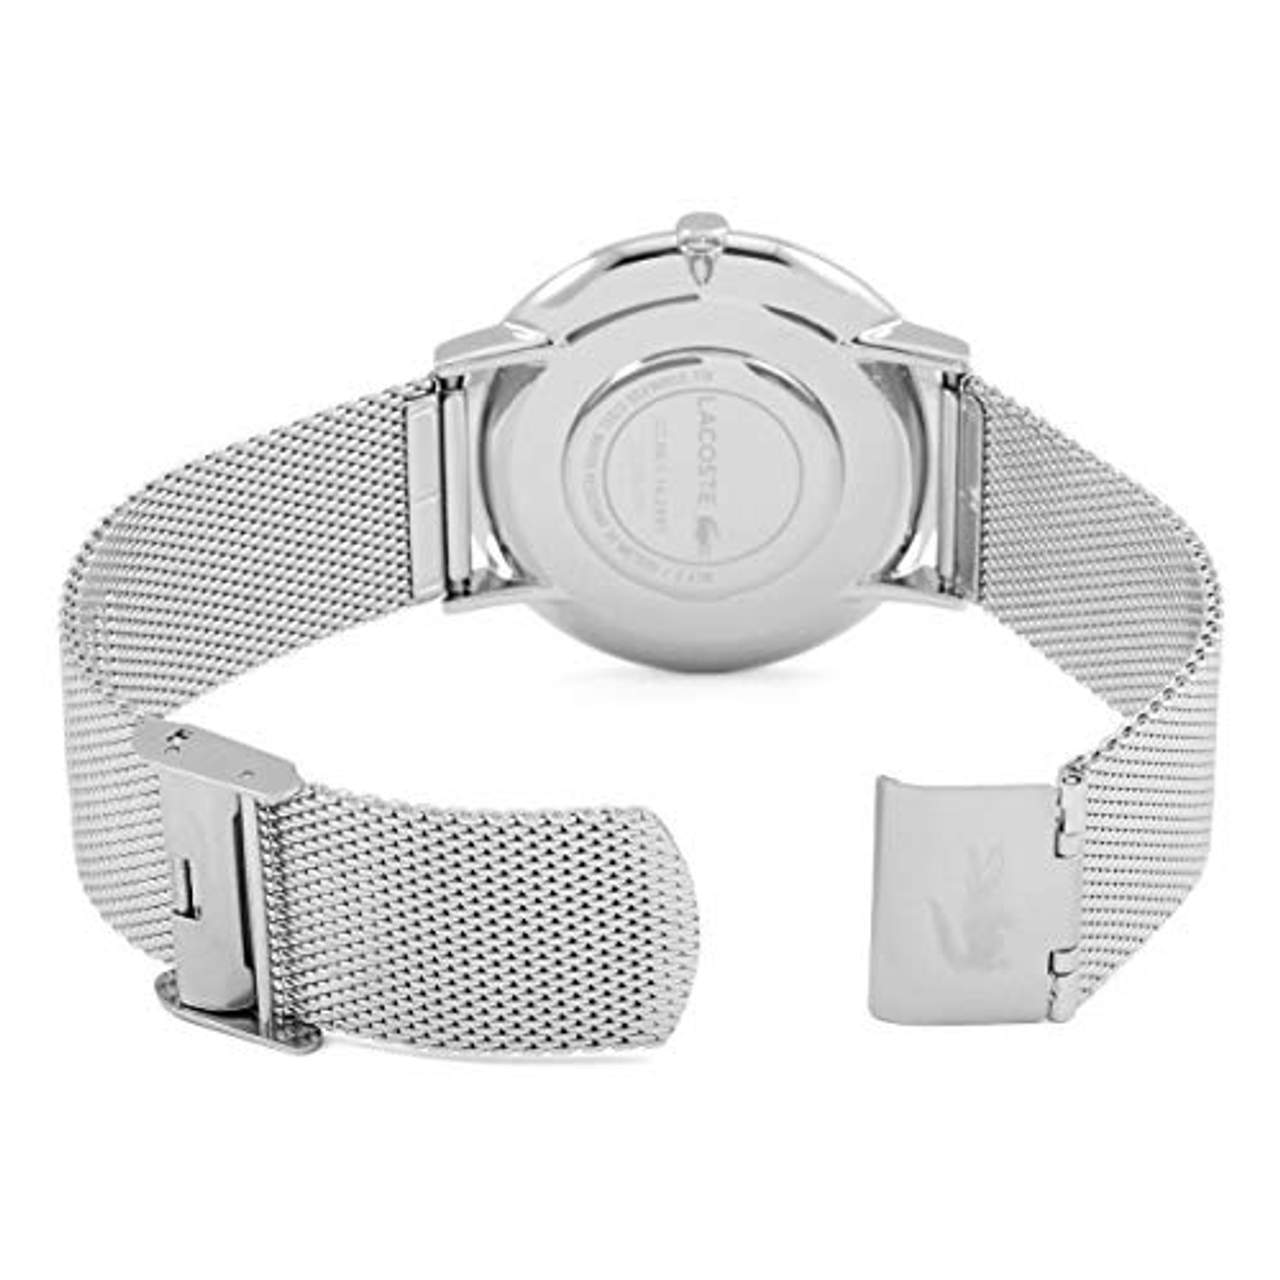 Lacoste Damen-Armbanduhr 2000987